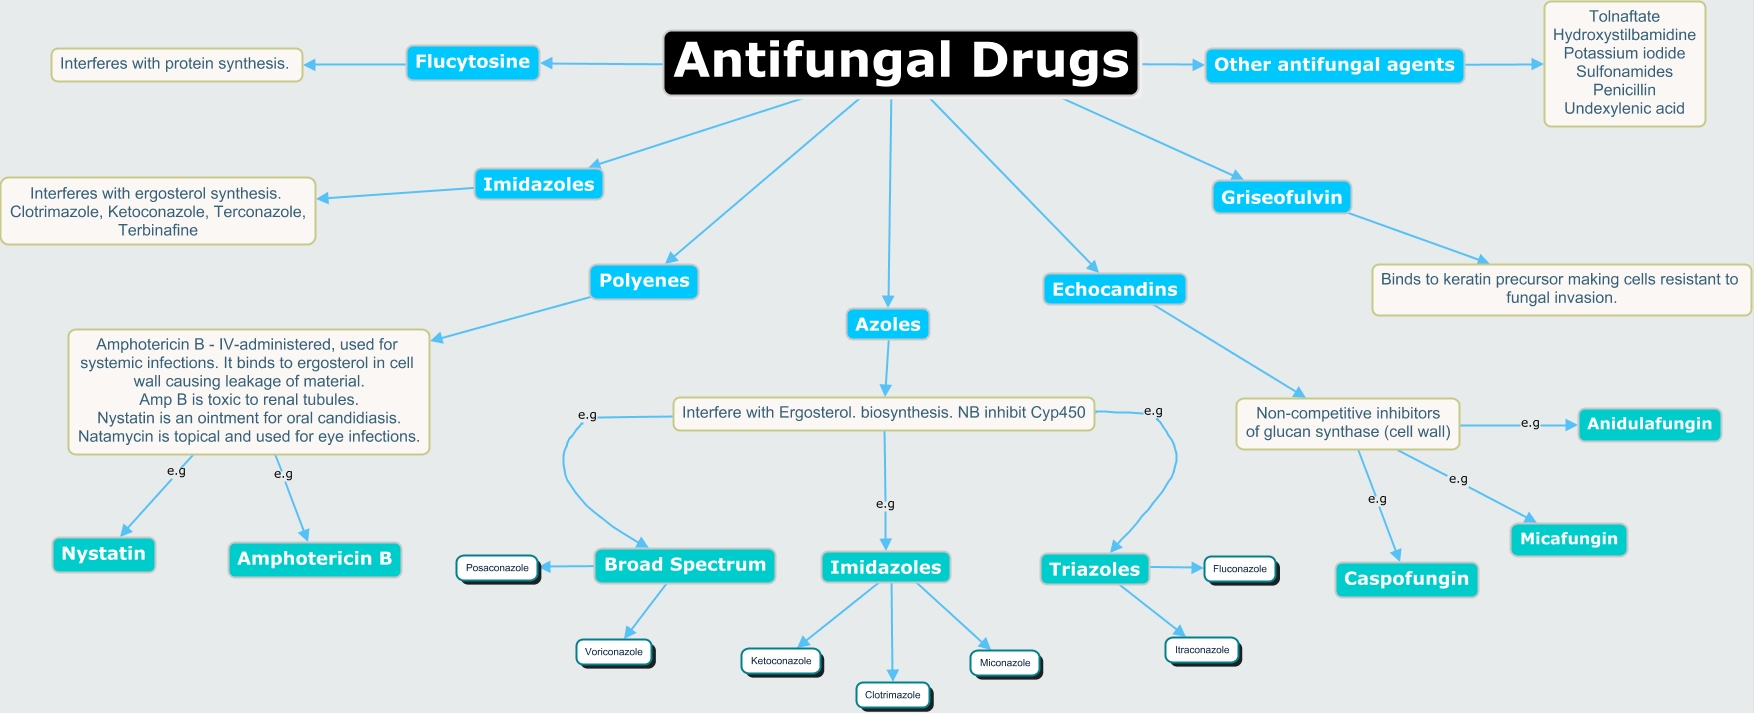 Antifungal medication - ScienceDirect Topics